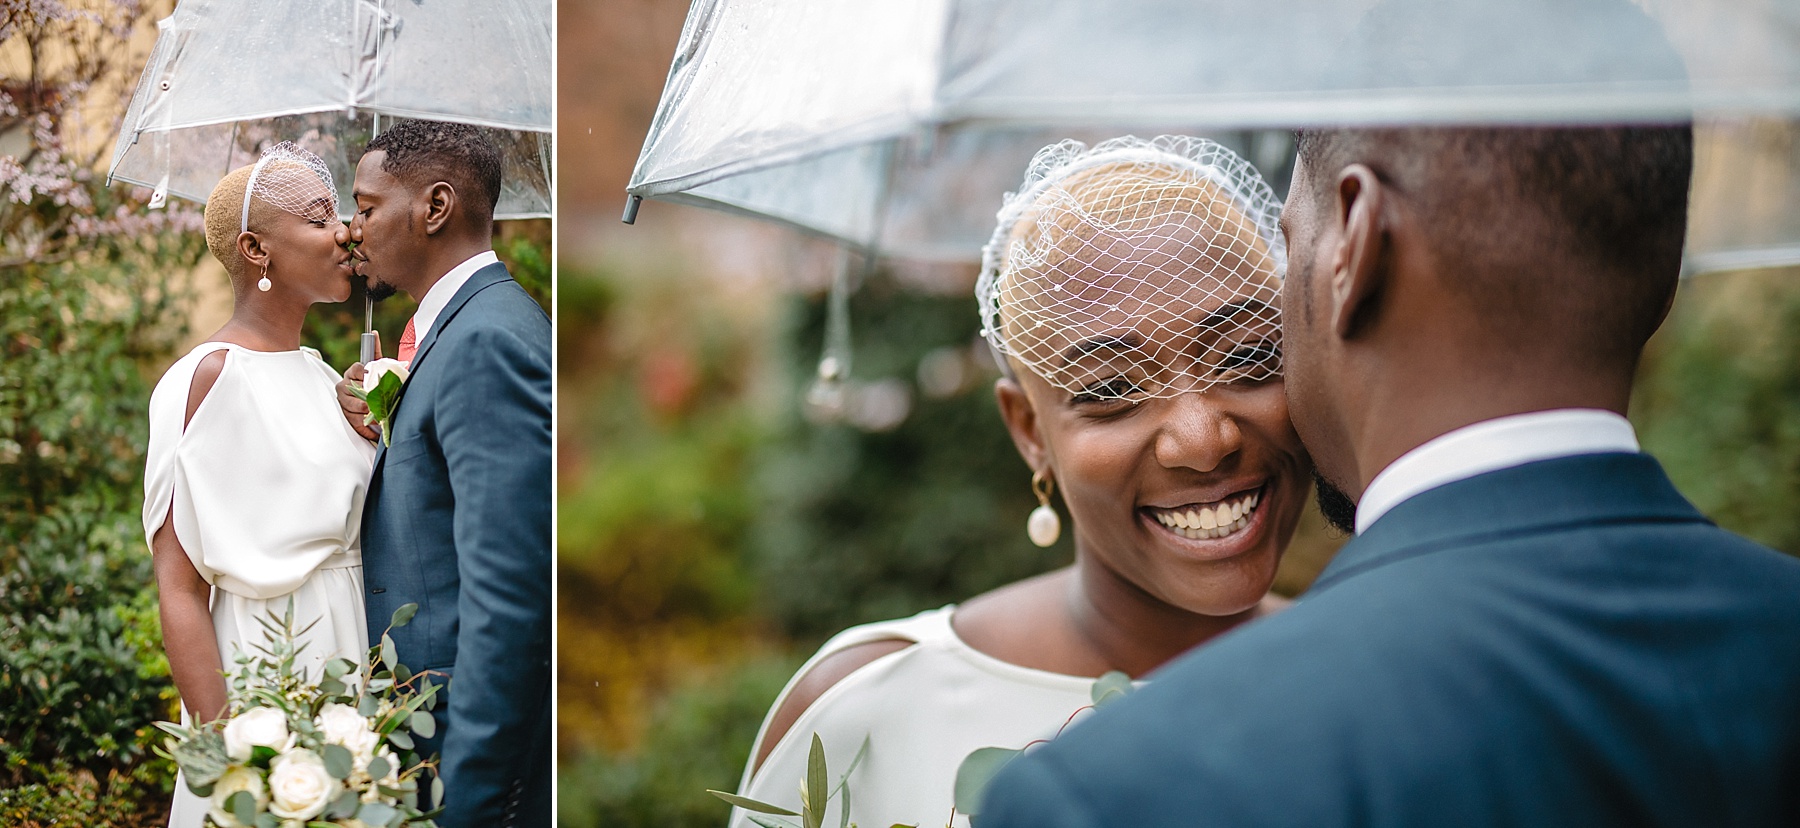 DC wedding photographer Damien Carter Photography captures elopement